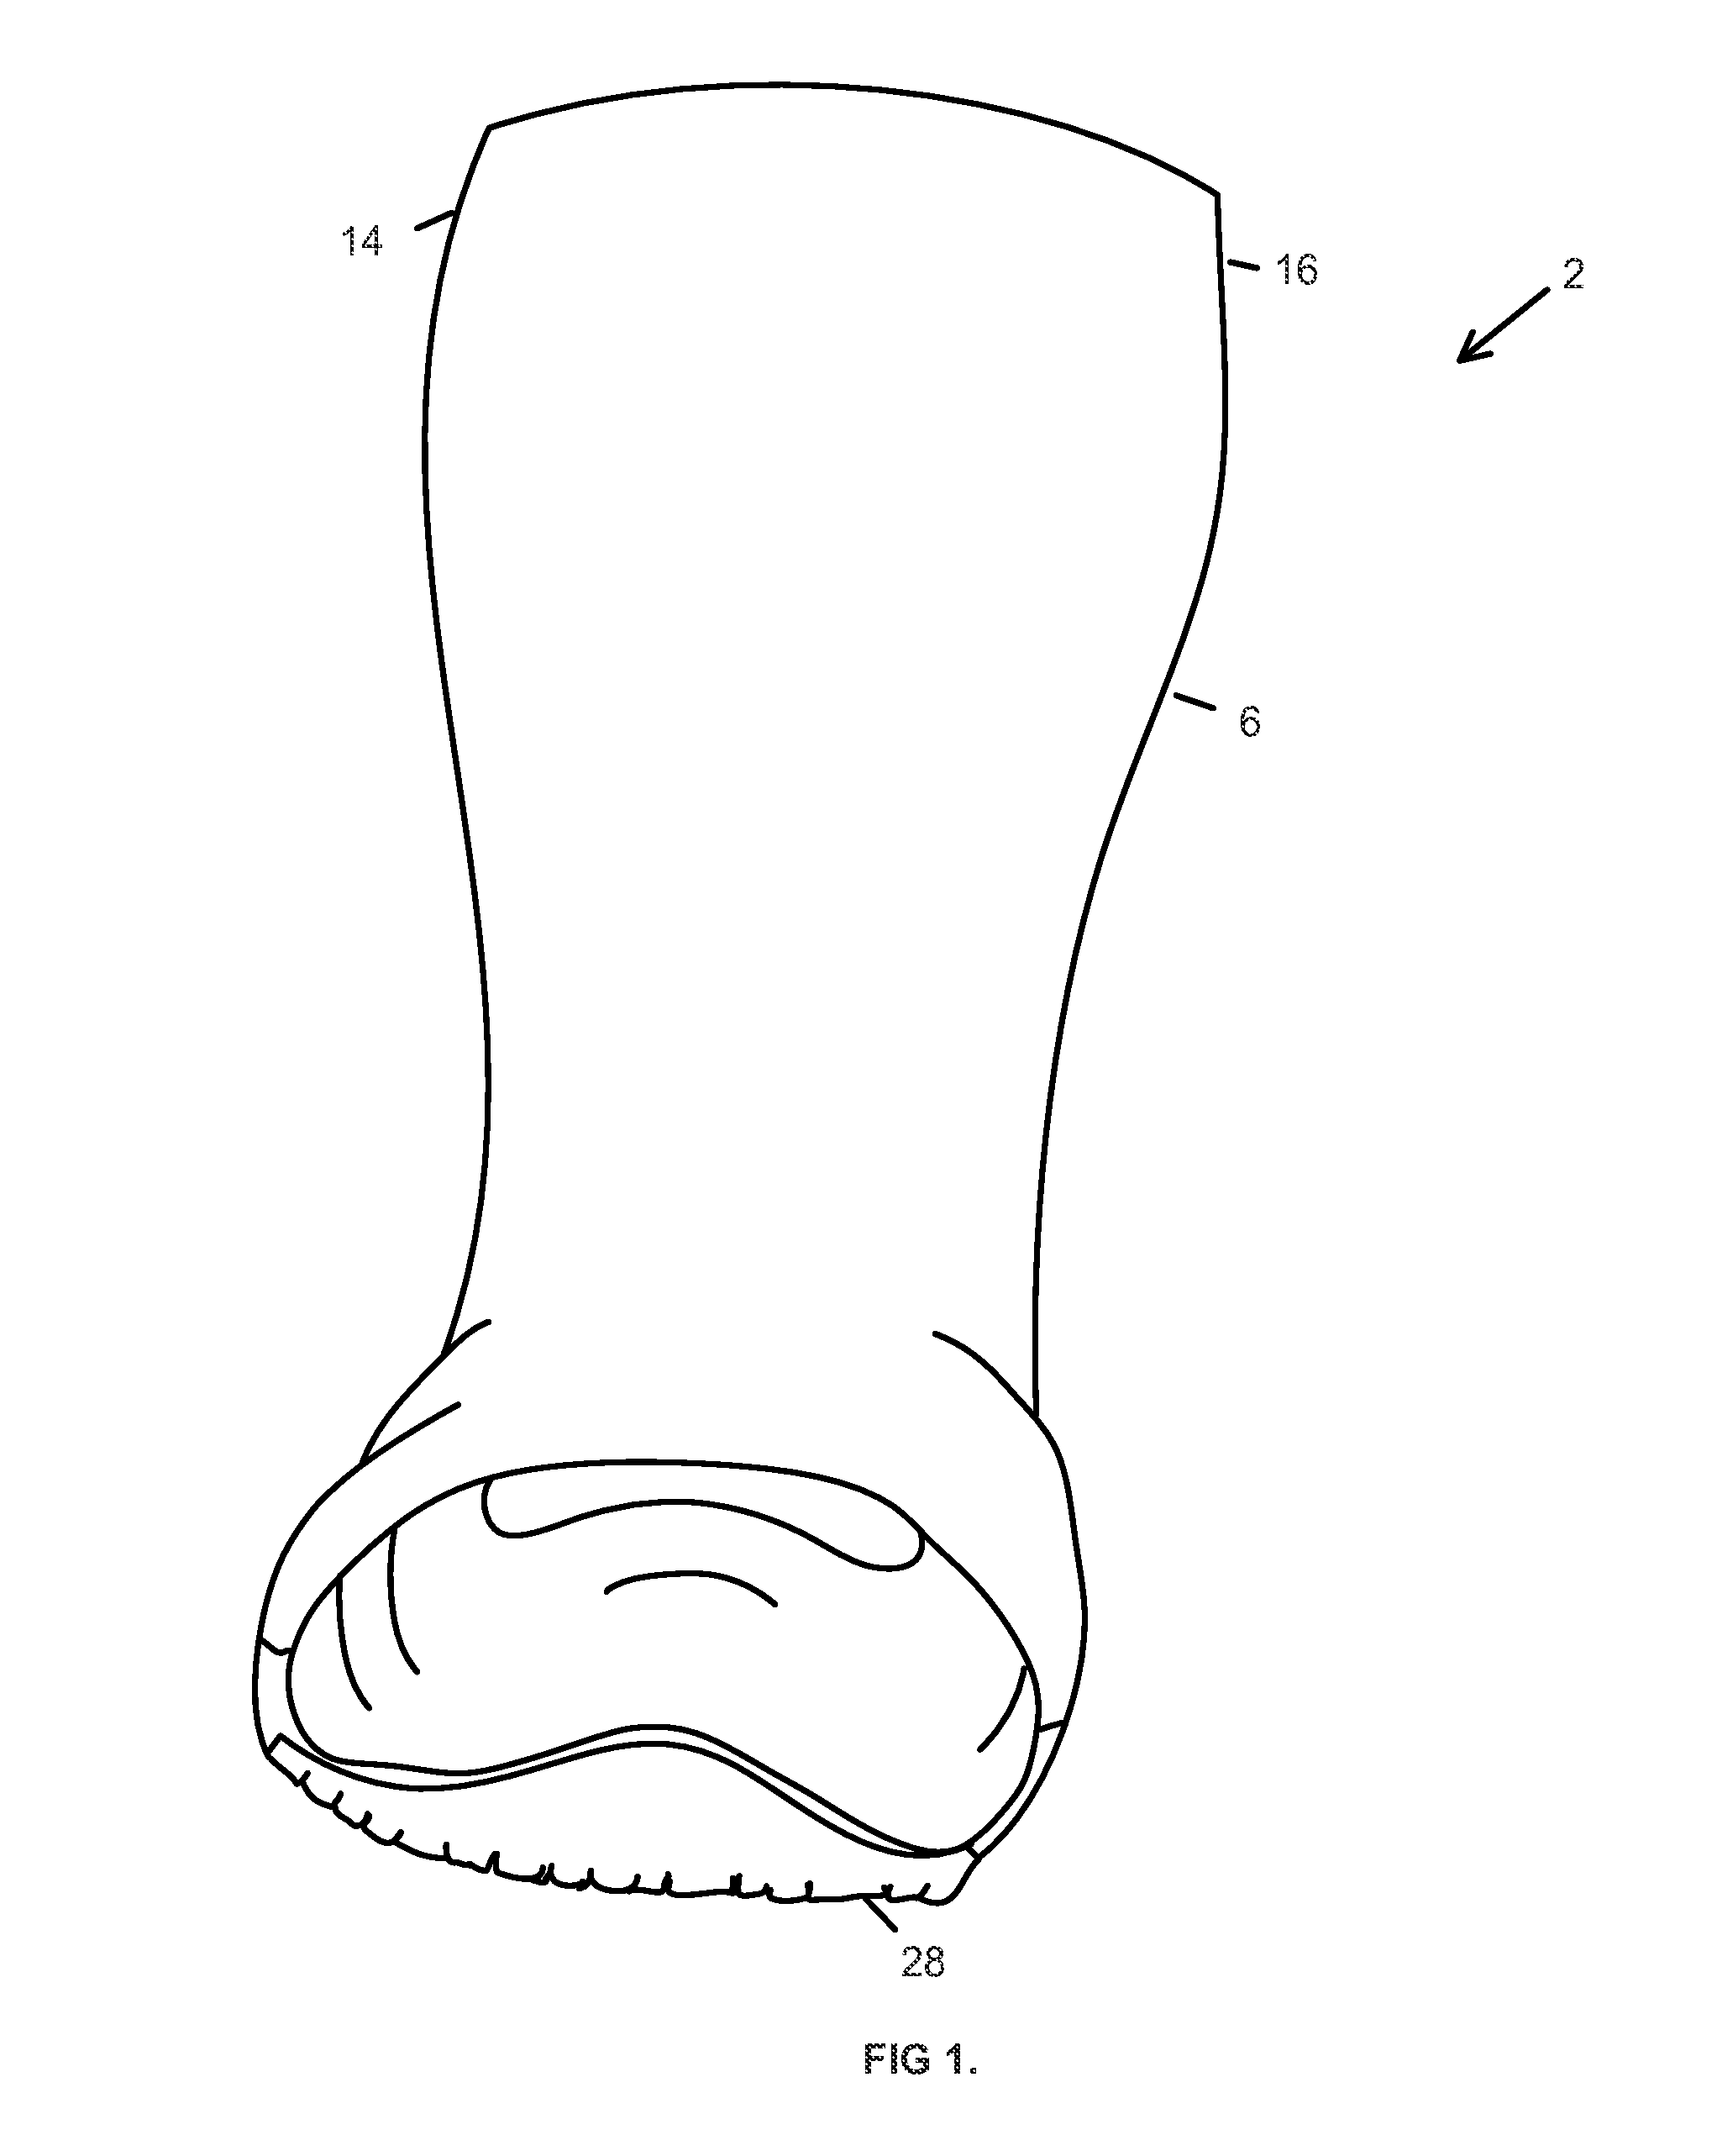 Prefabricated walking boot